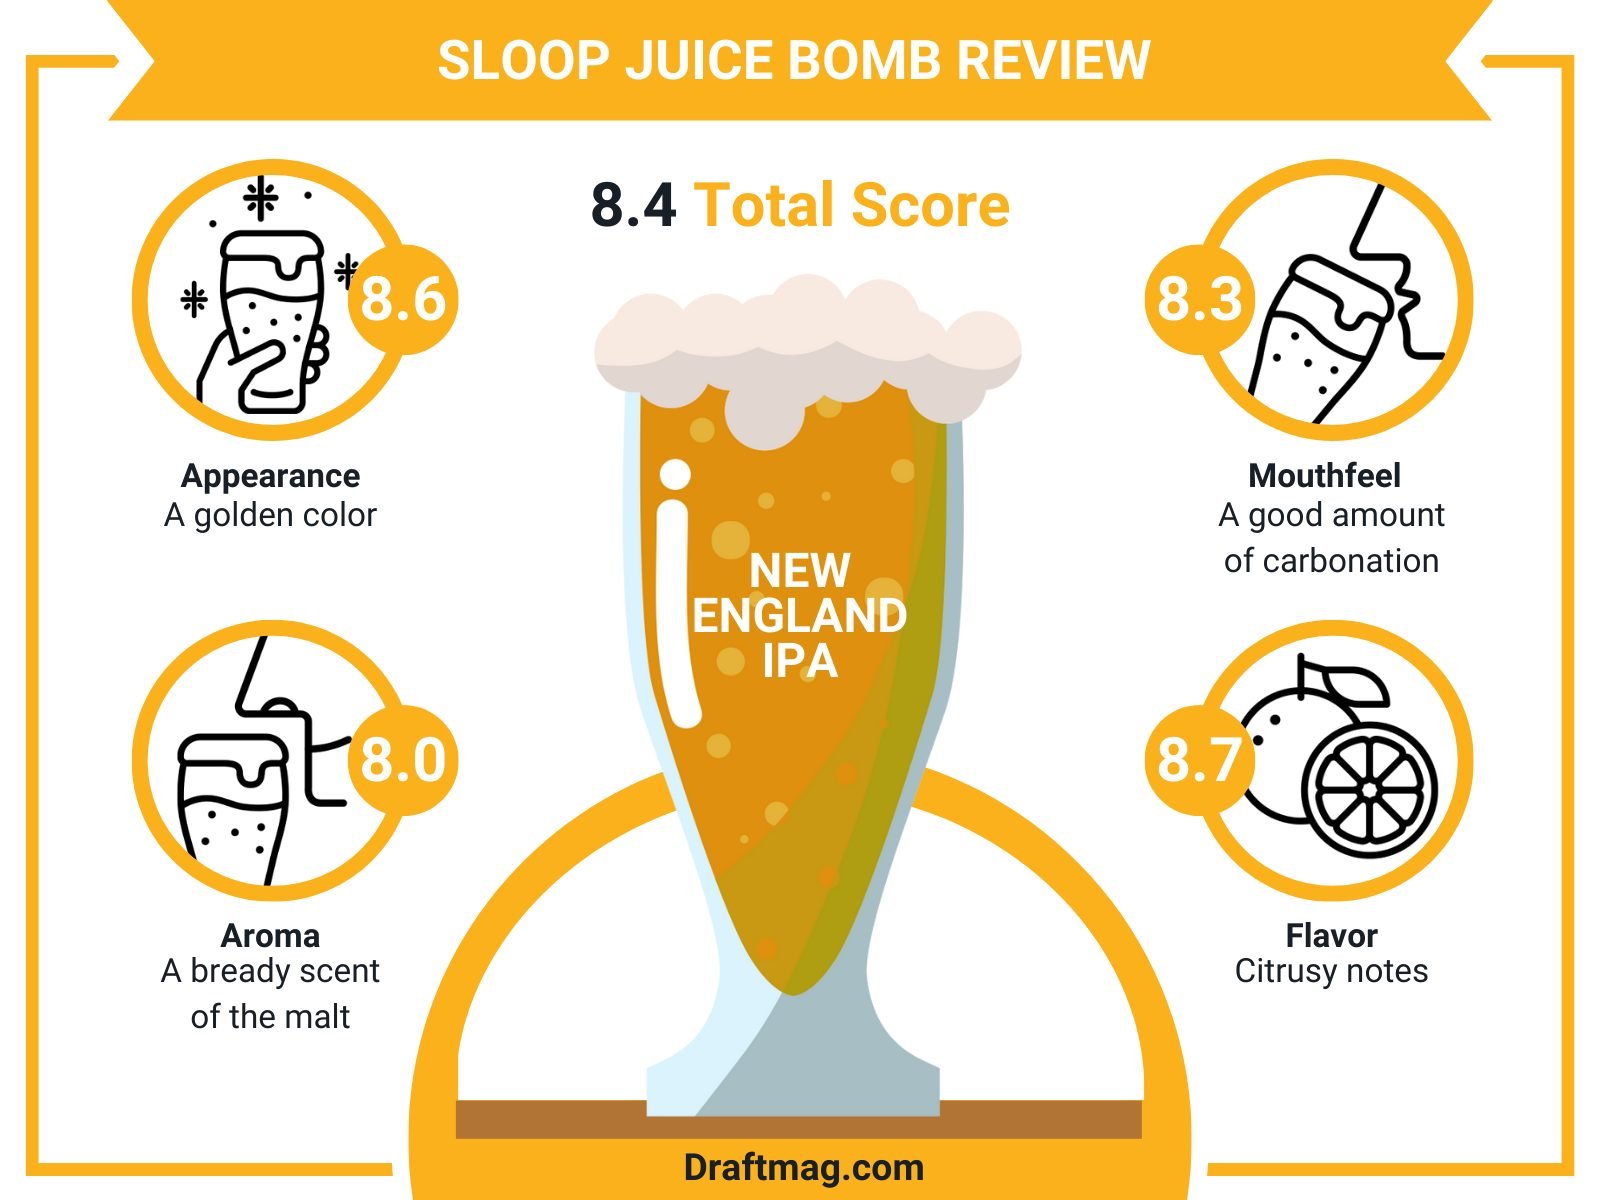 Sloop Juice Bomb Review Infographic